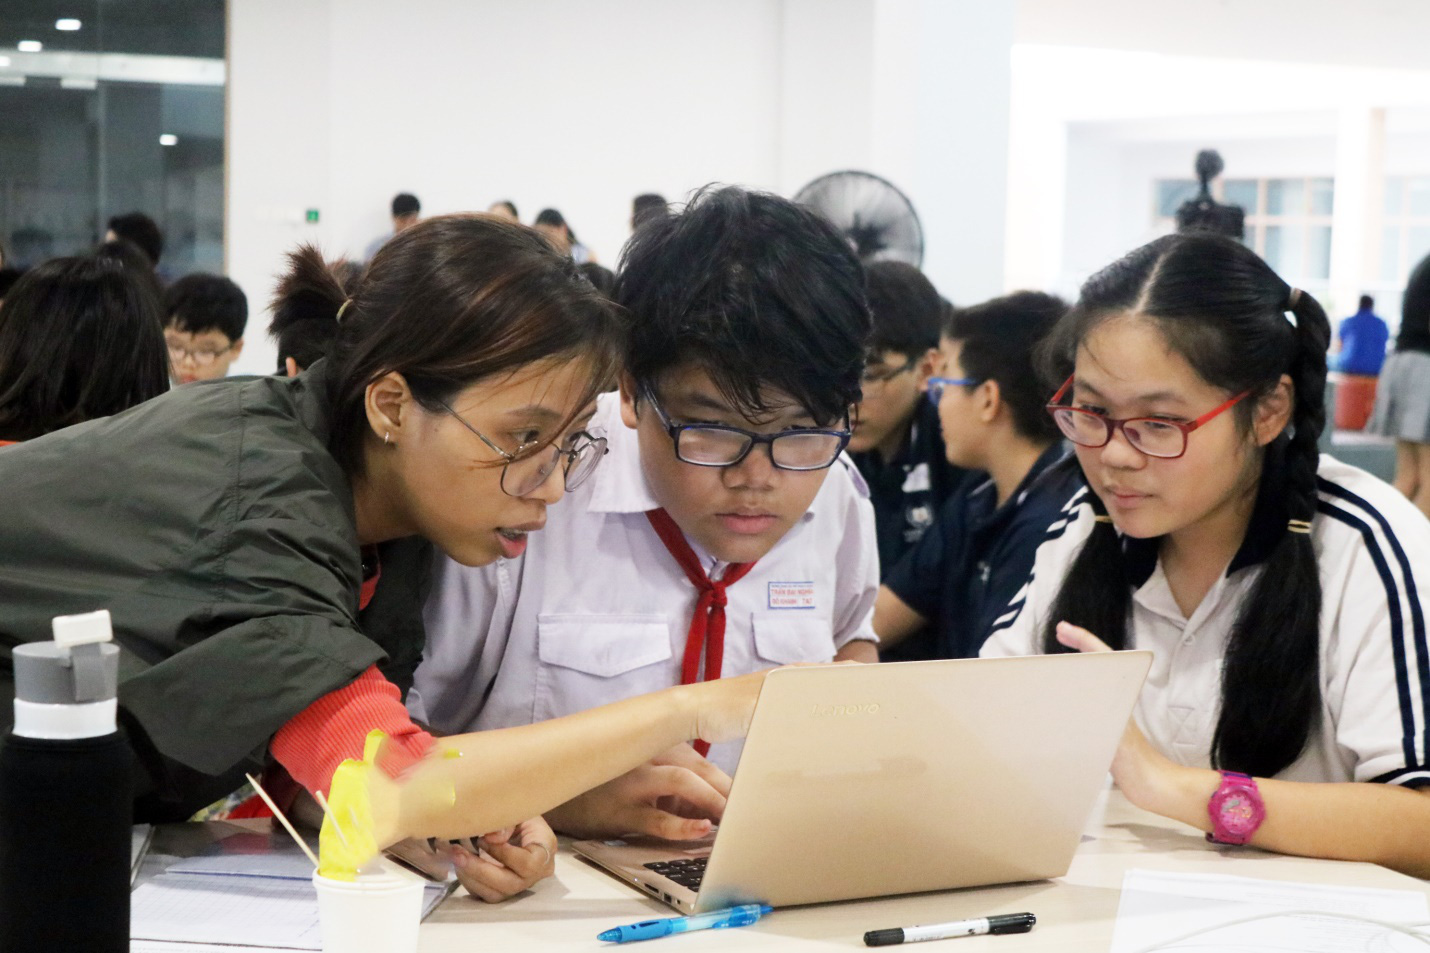 More localities welcome students back to school in Vietnam